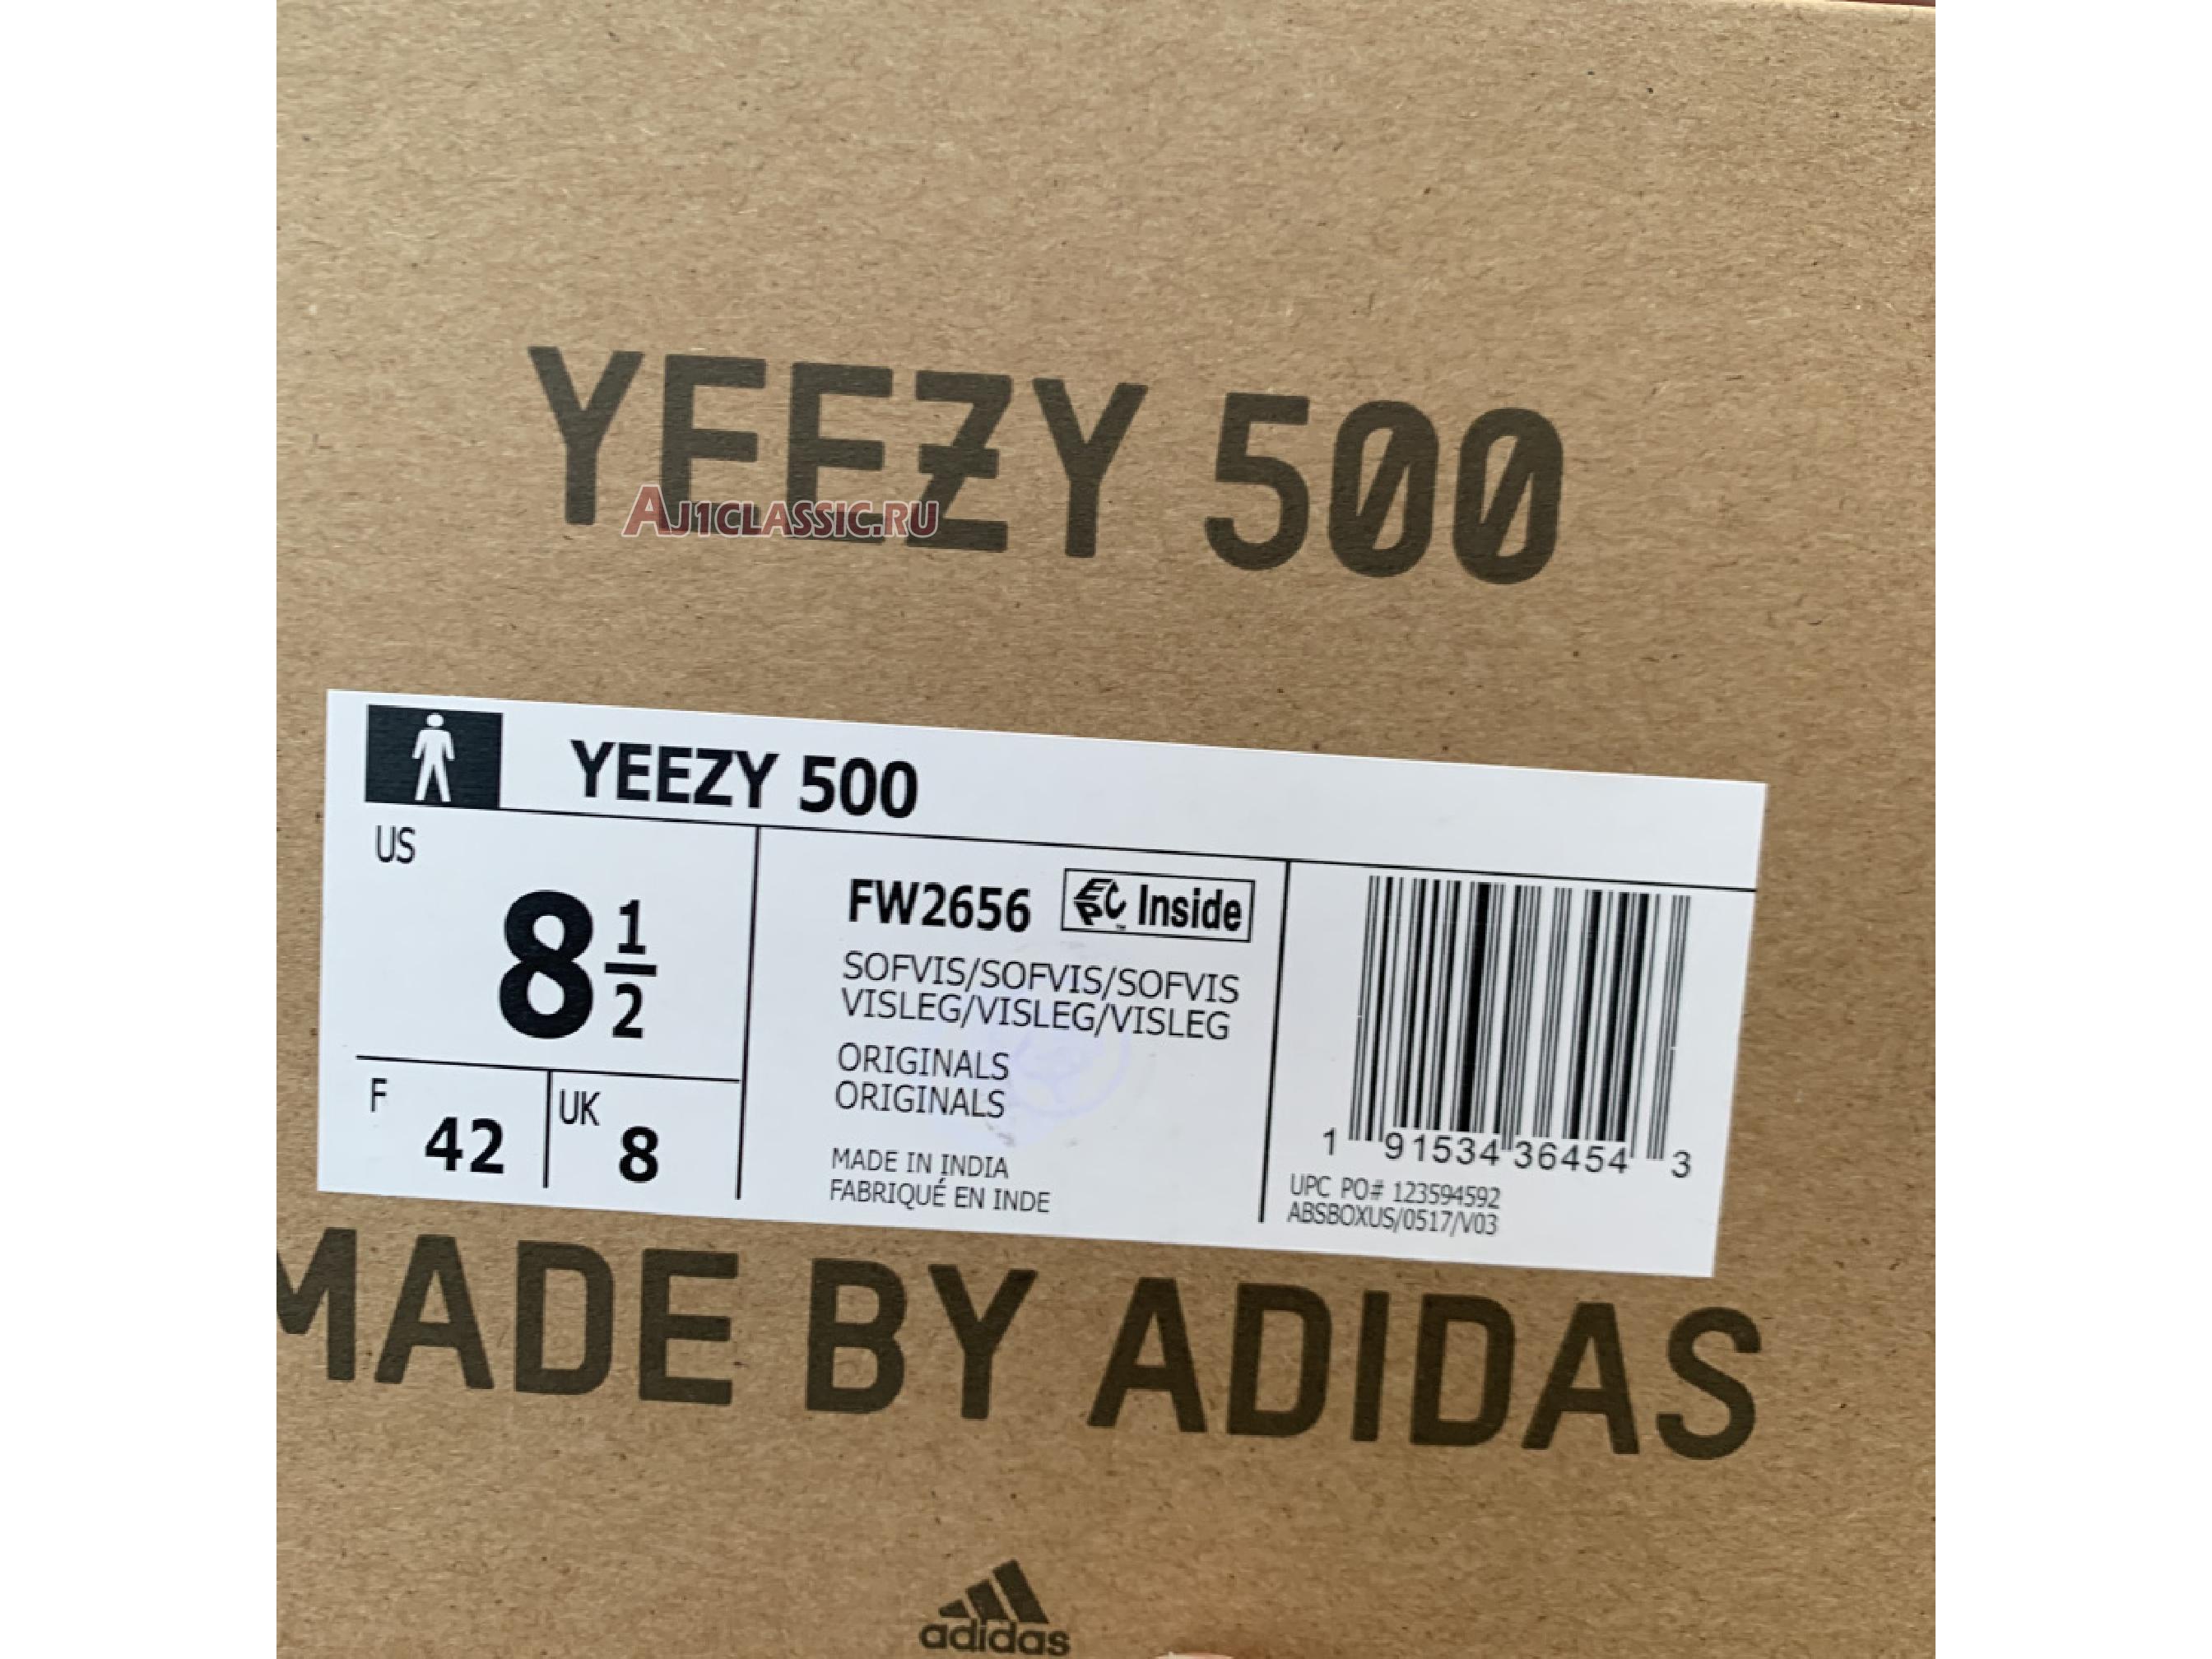 Adidas Yeezy 500 "Soft Vision" FW2656